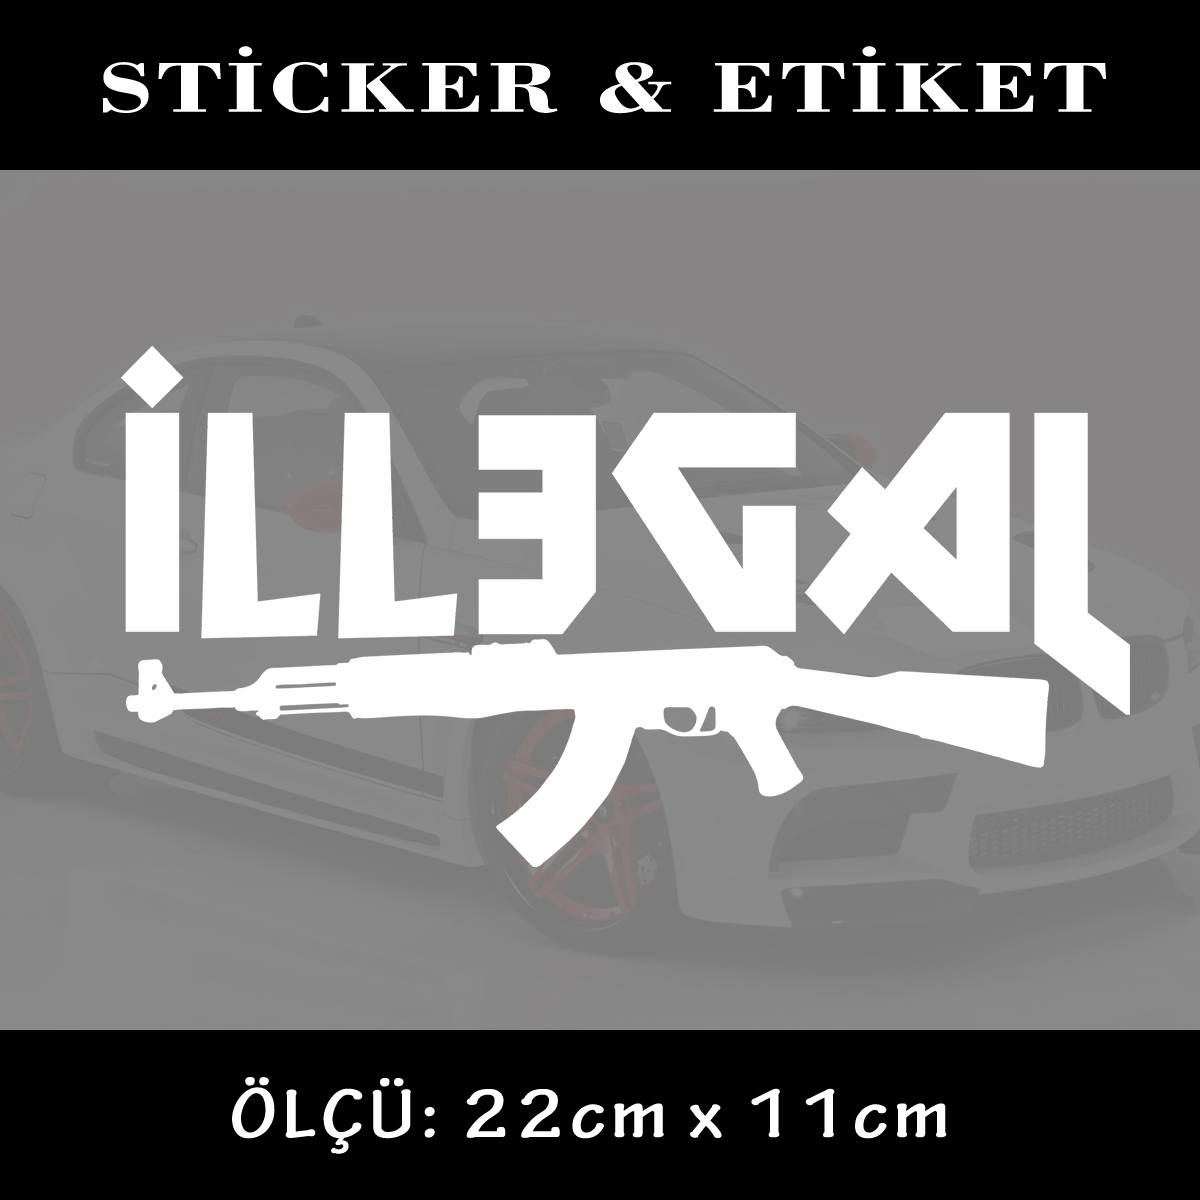 ILLEGAL - İllegal ukala sticker